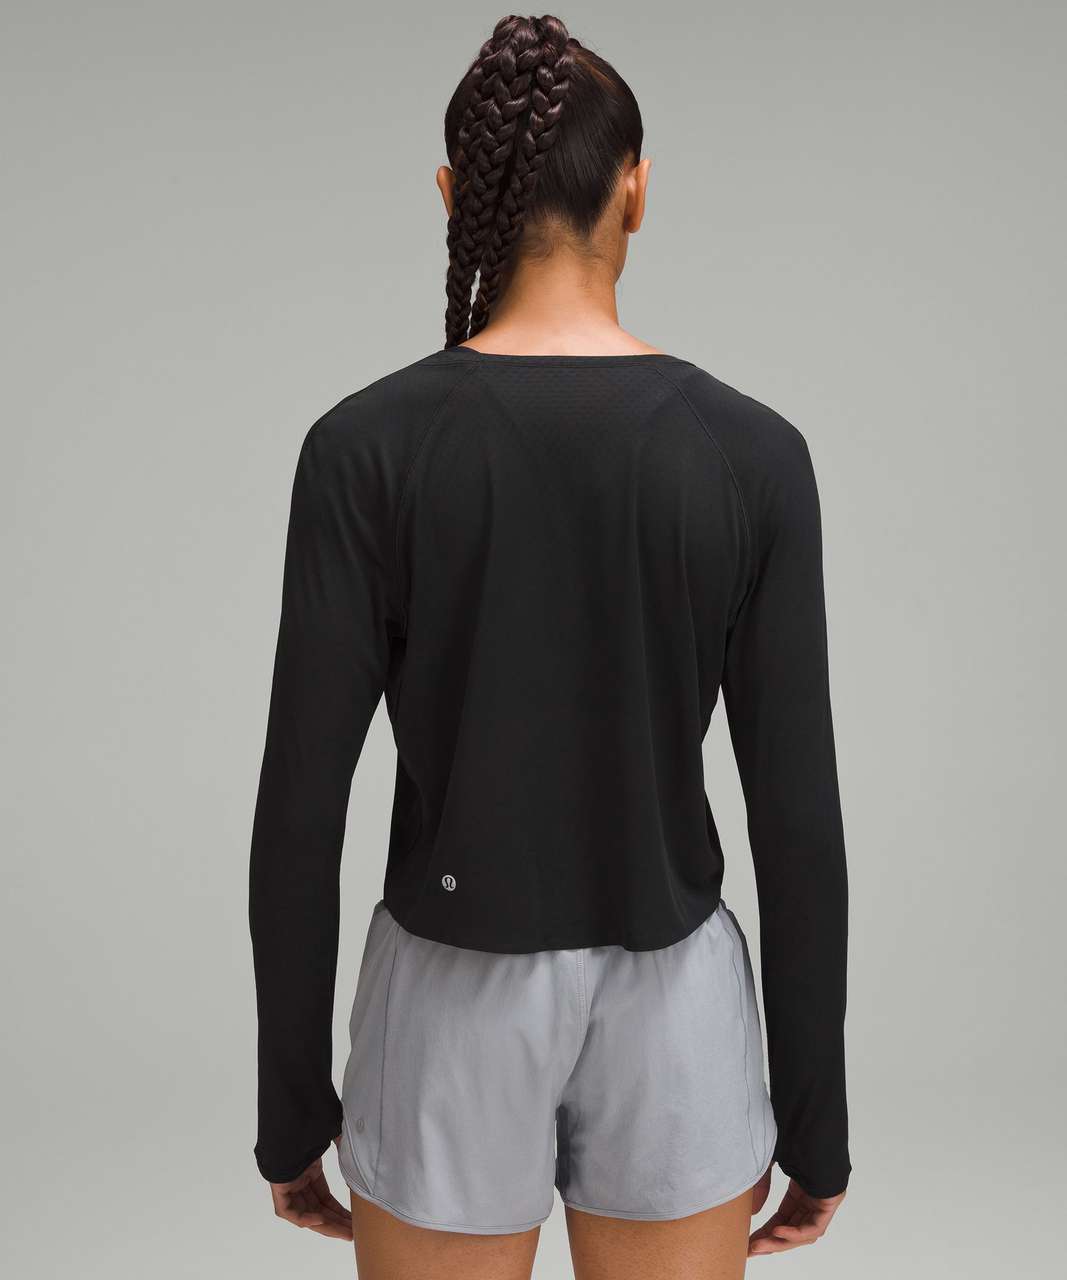 Lululemon Fast and Free Race Length Long-Sleeve Shirt - Black